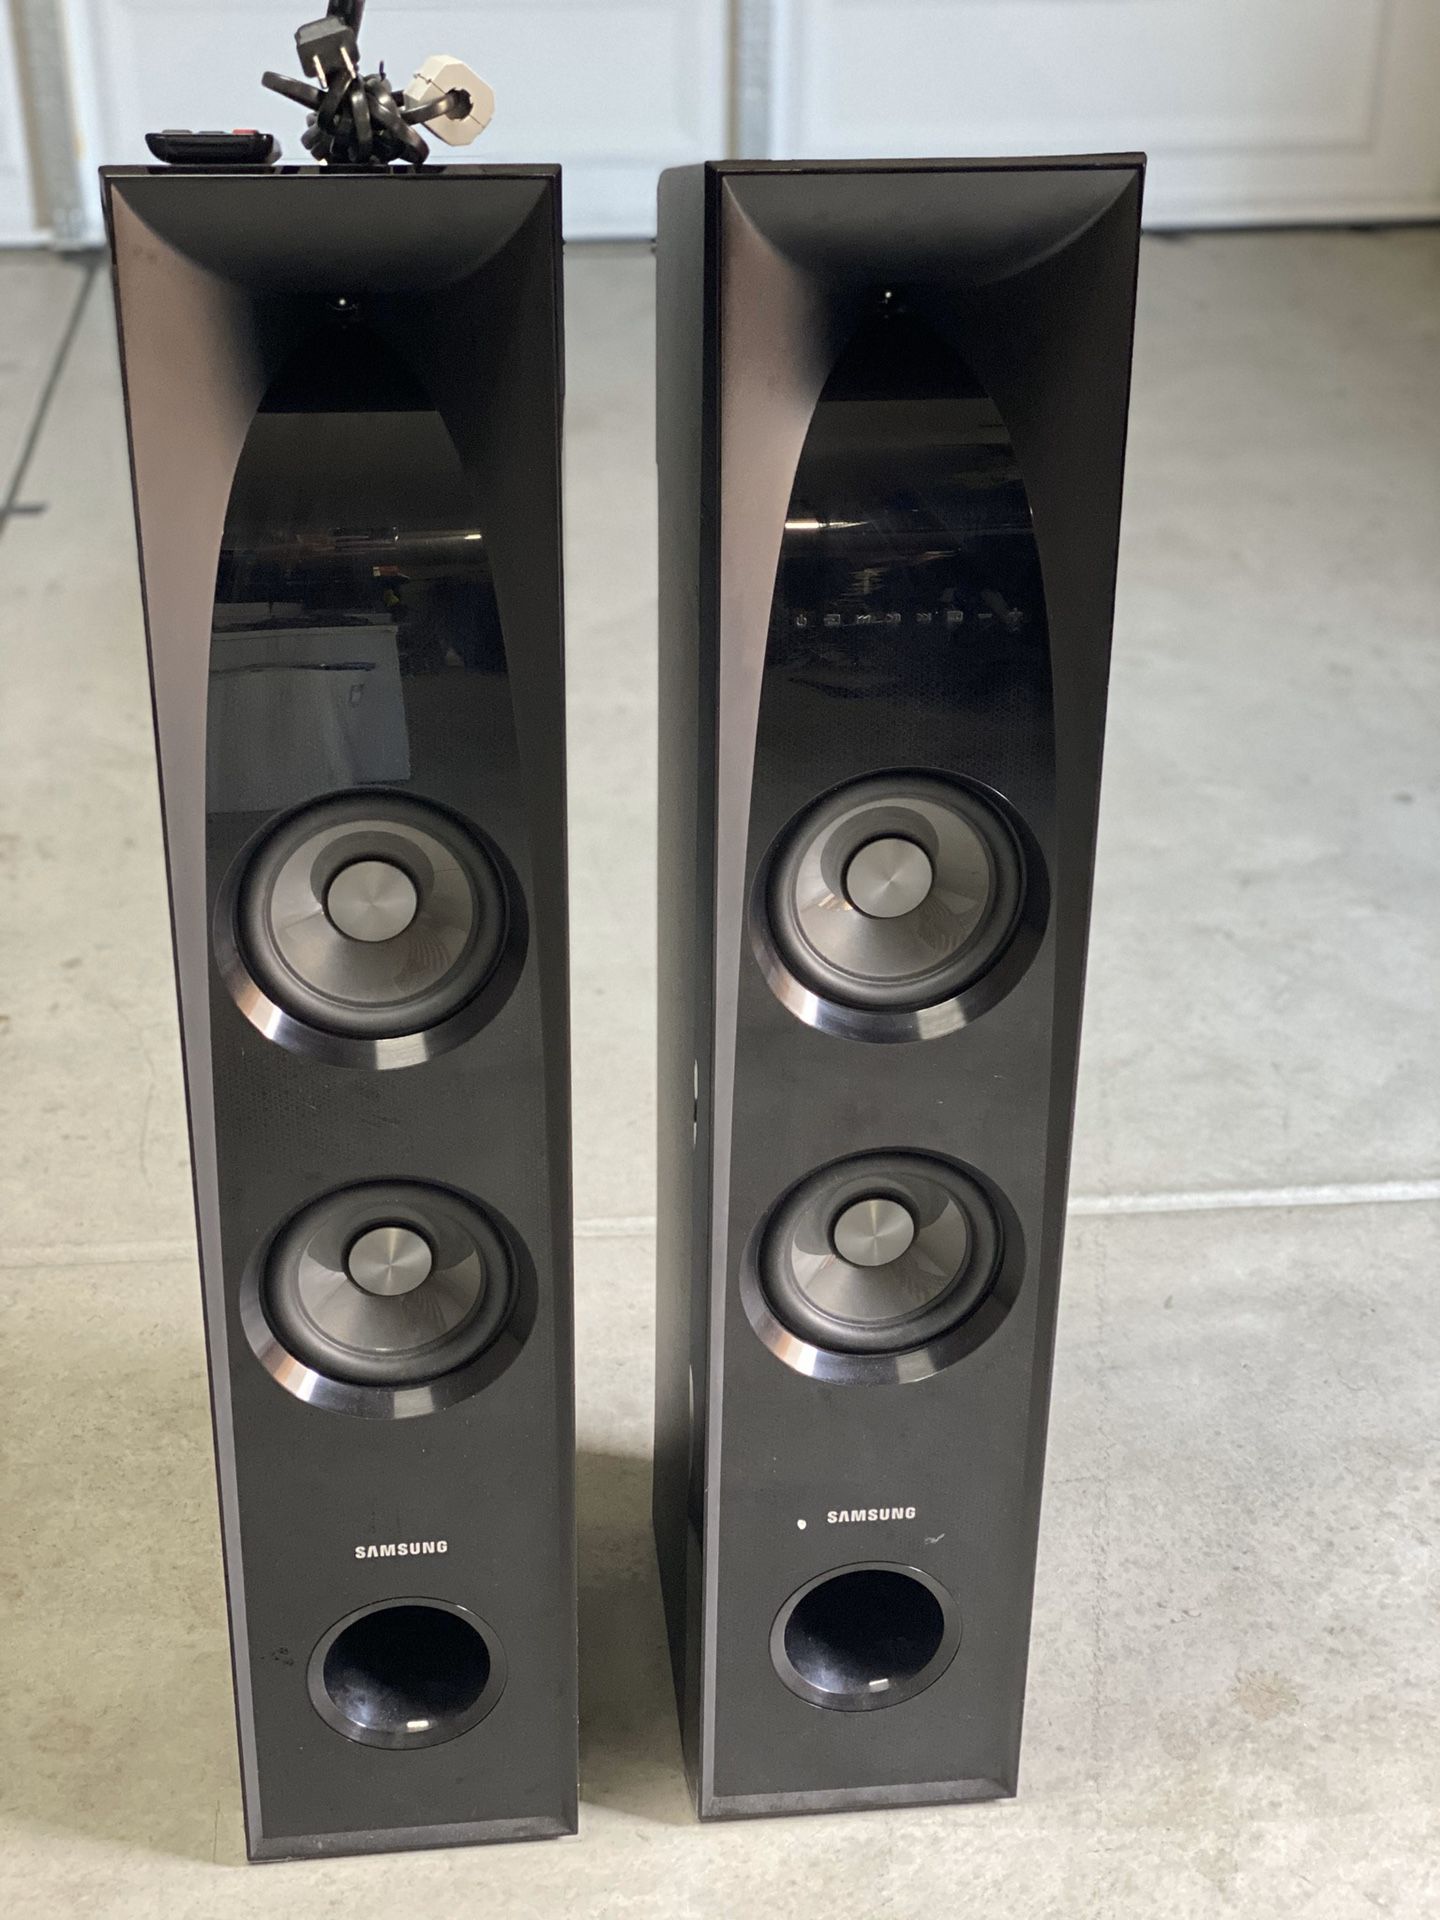 Samsung TW-J5500 Tower Speakers $200